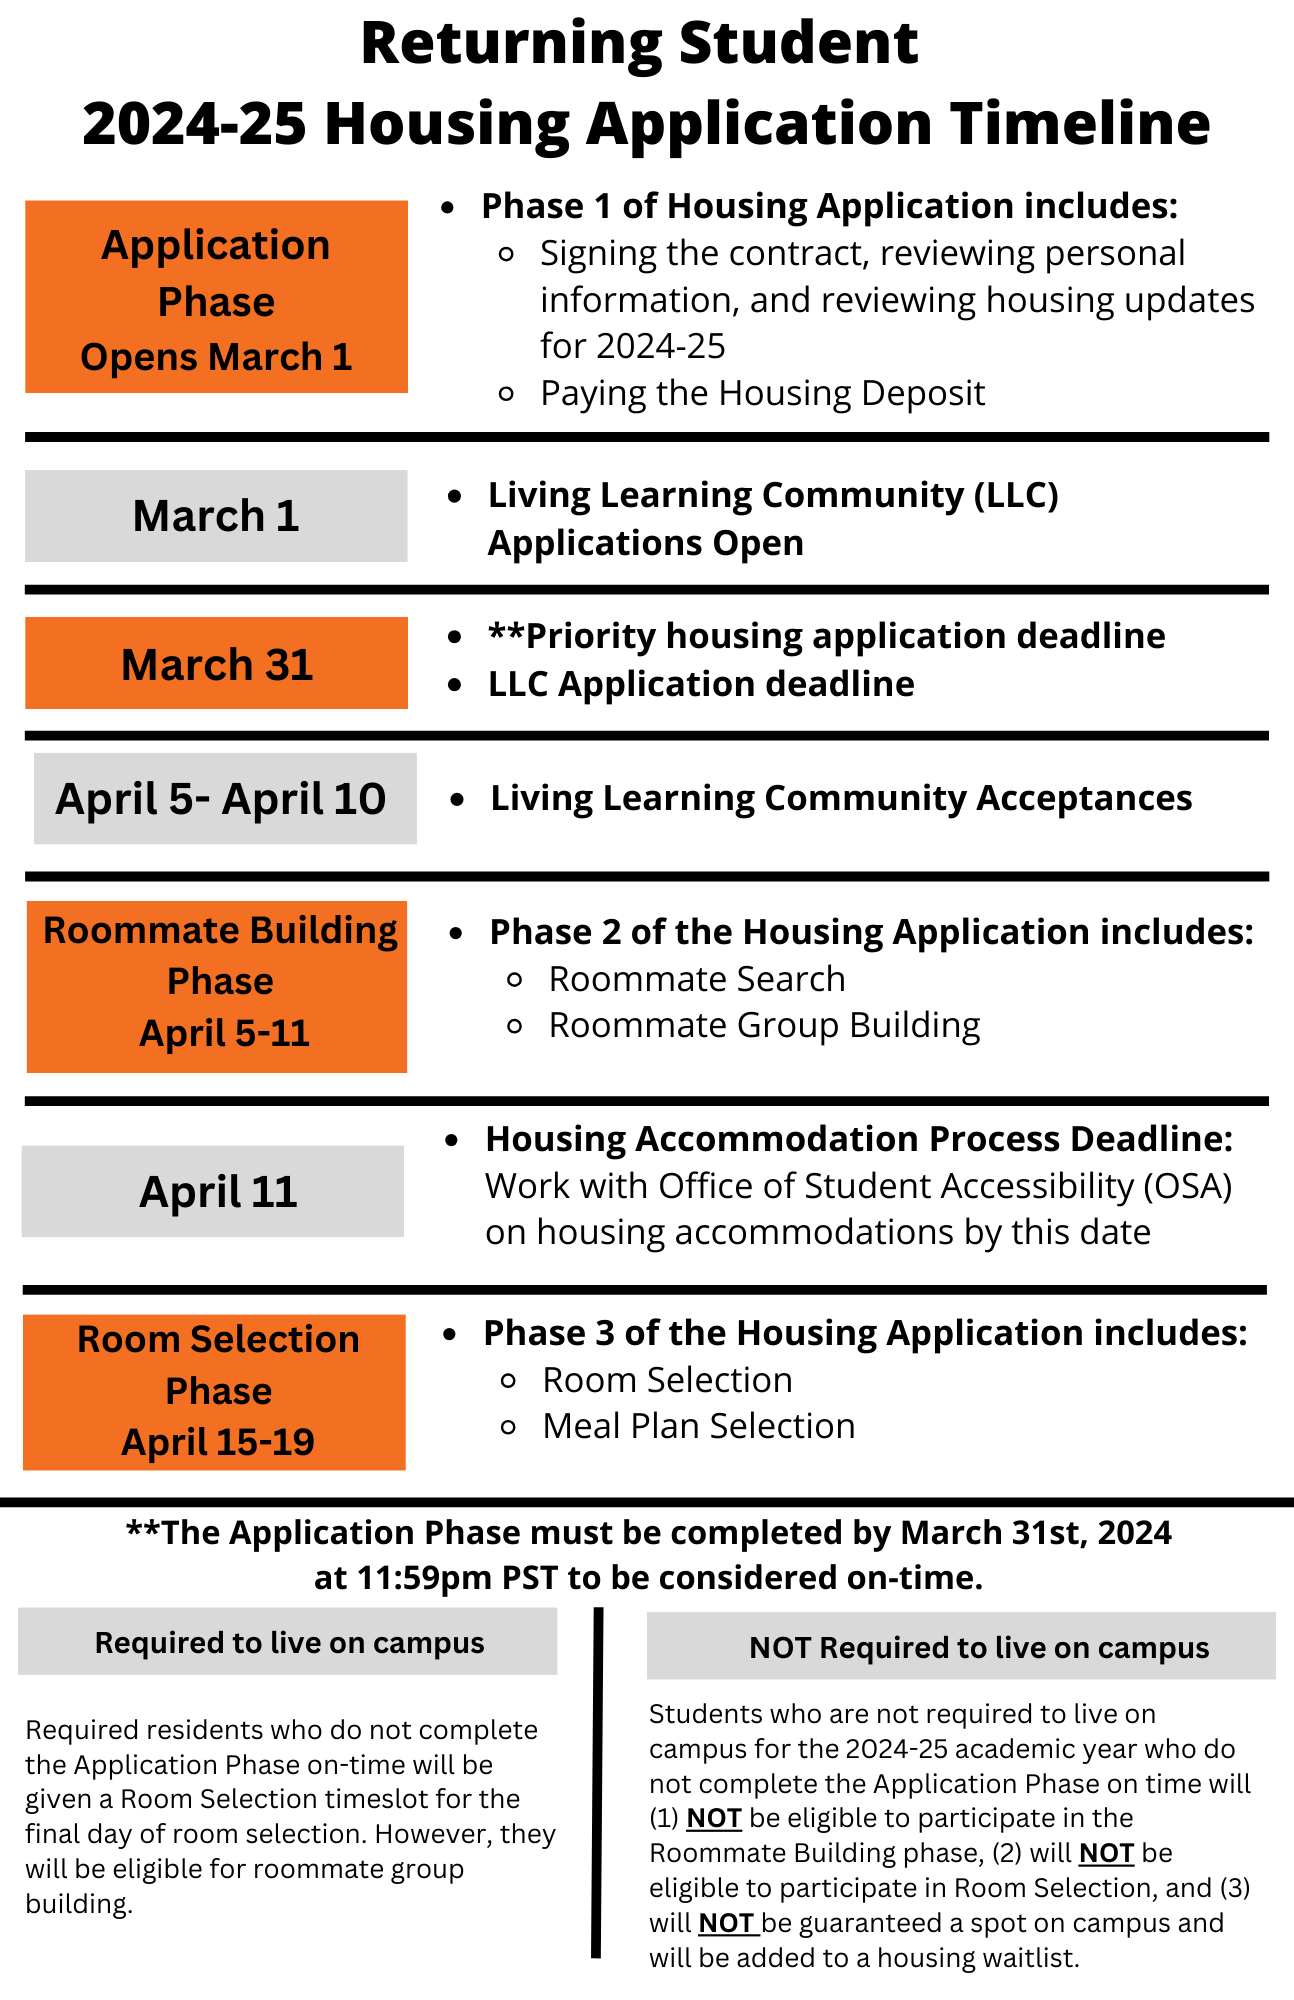 2024-2025 Returning Student Housing Application Timeline